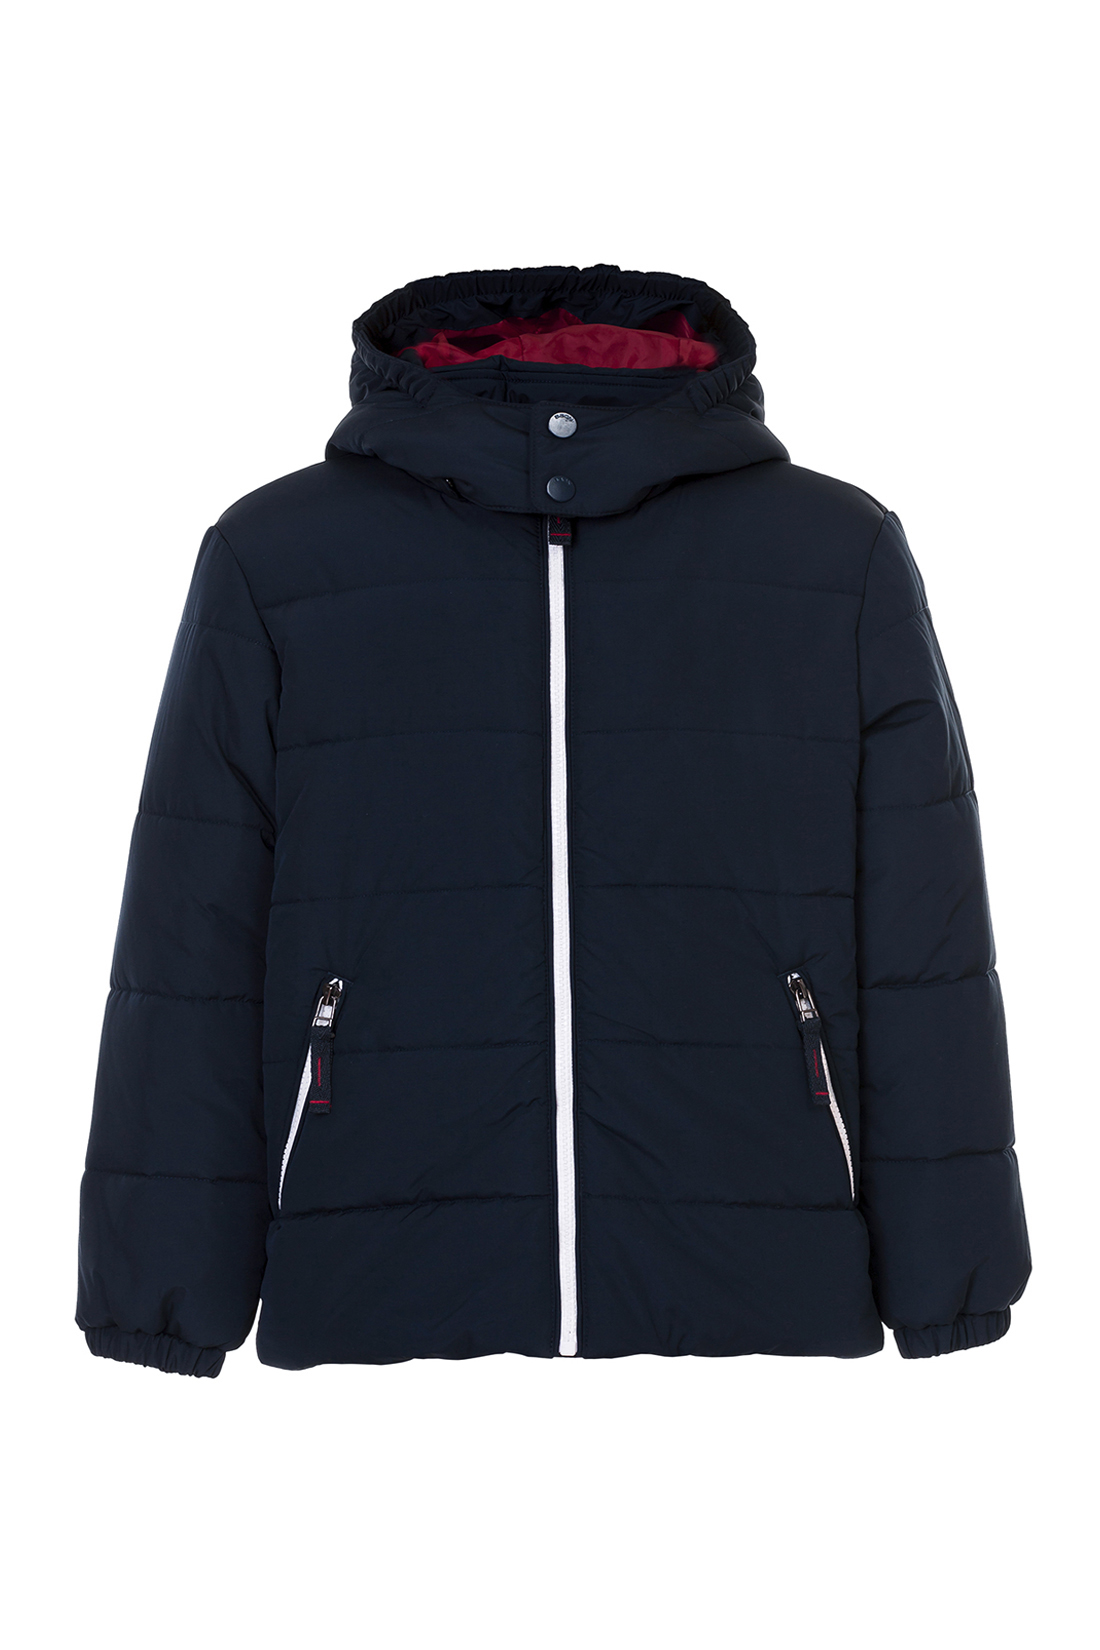 Куртка для мальчика (арт. baon BK537503), размер 122-128, цвет синий Куртка для мальчика (арт. baon BK537503) - фото 3